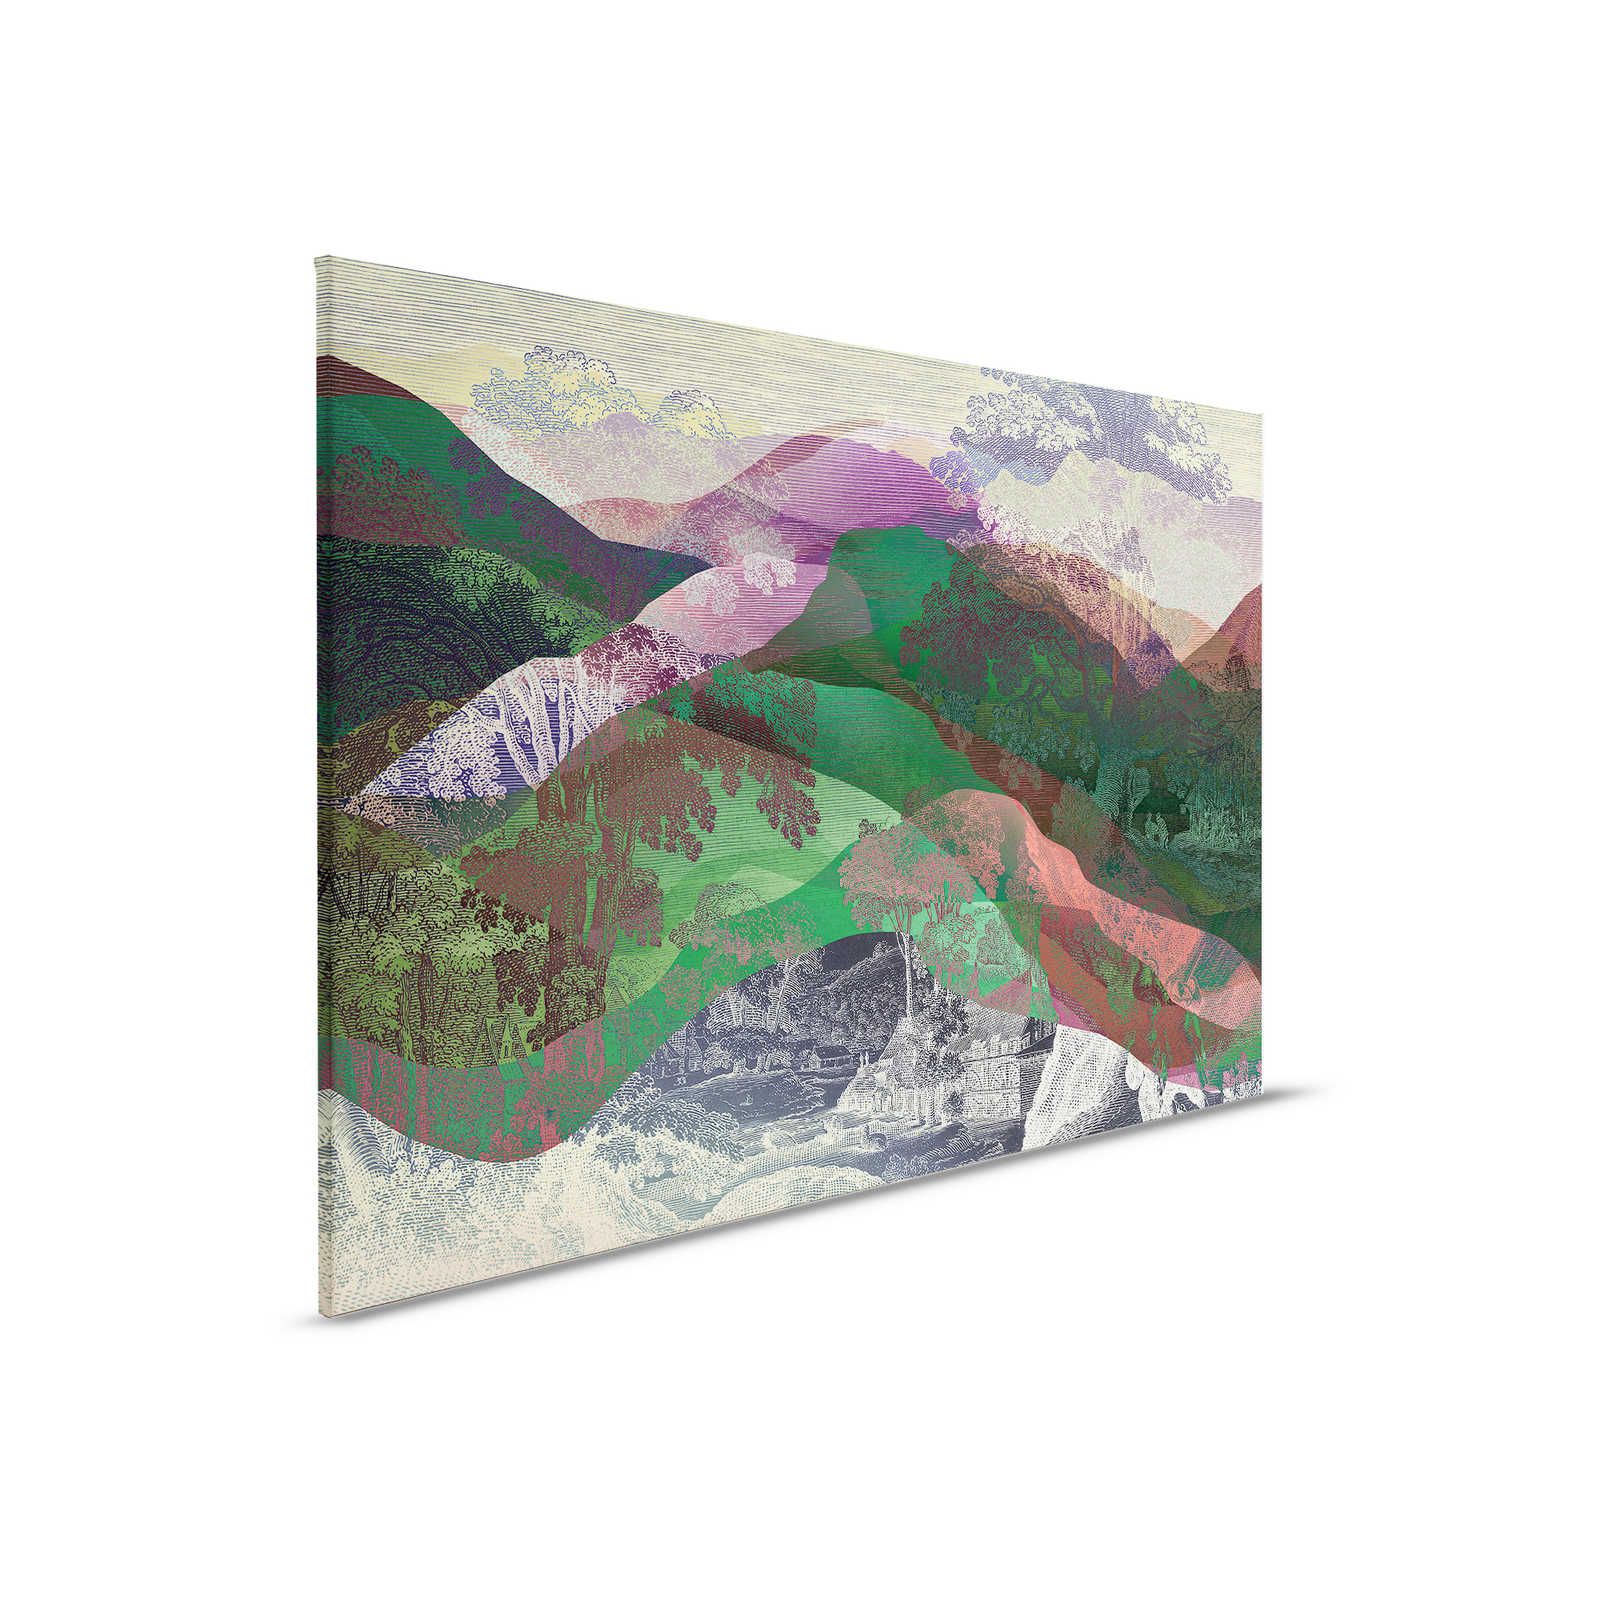         Hidden Valley 1 - Canvas painting Vintage meets Modern Mountain Landscape - 0.90 m x 0.60 m
    